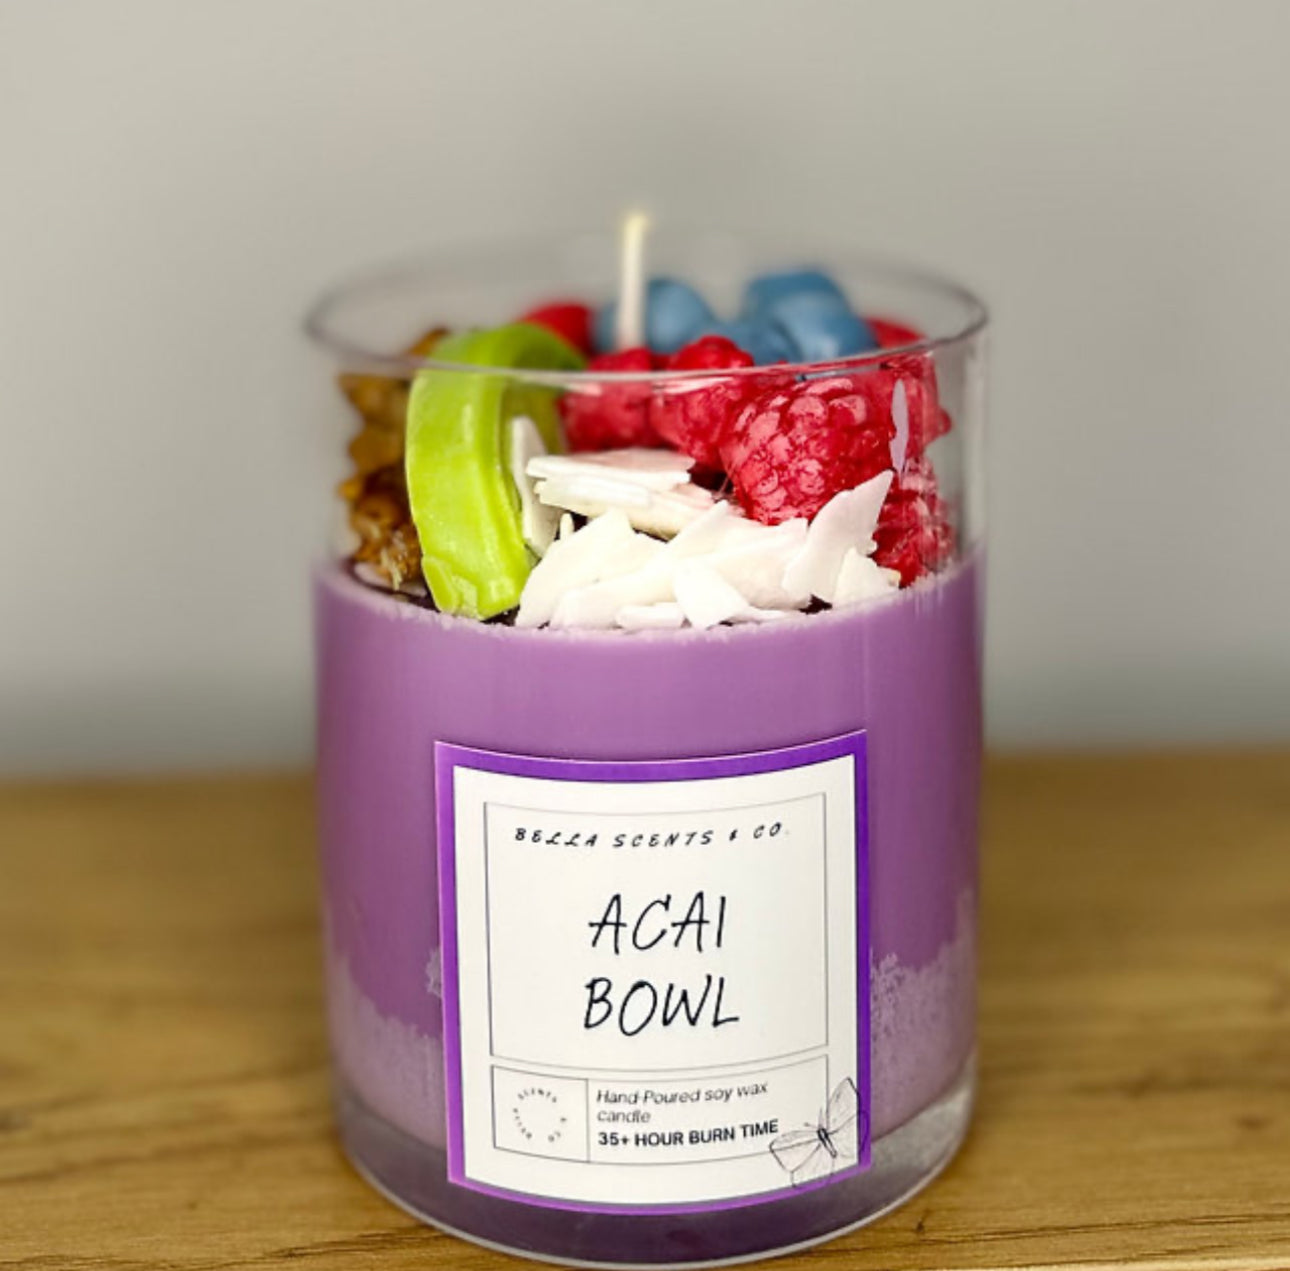 Acai Bowl Dessert Candle